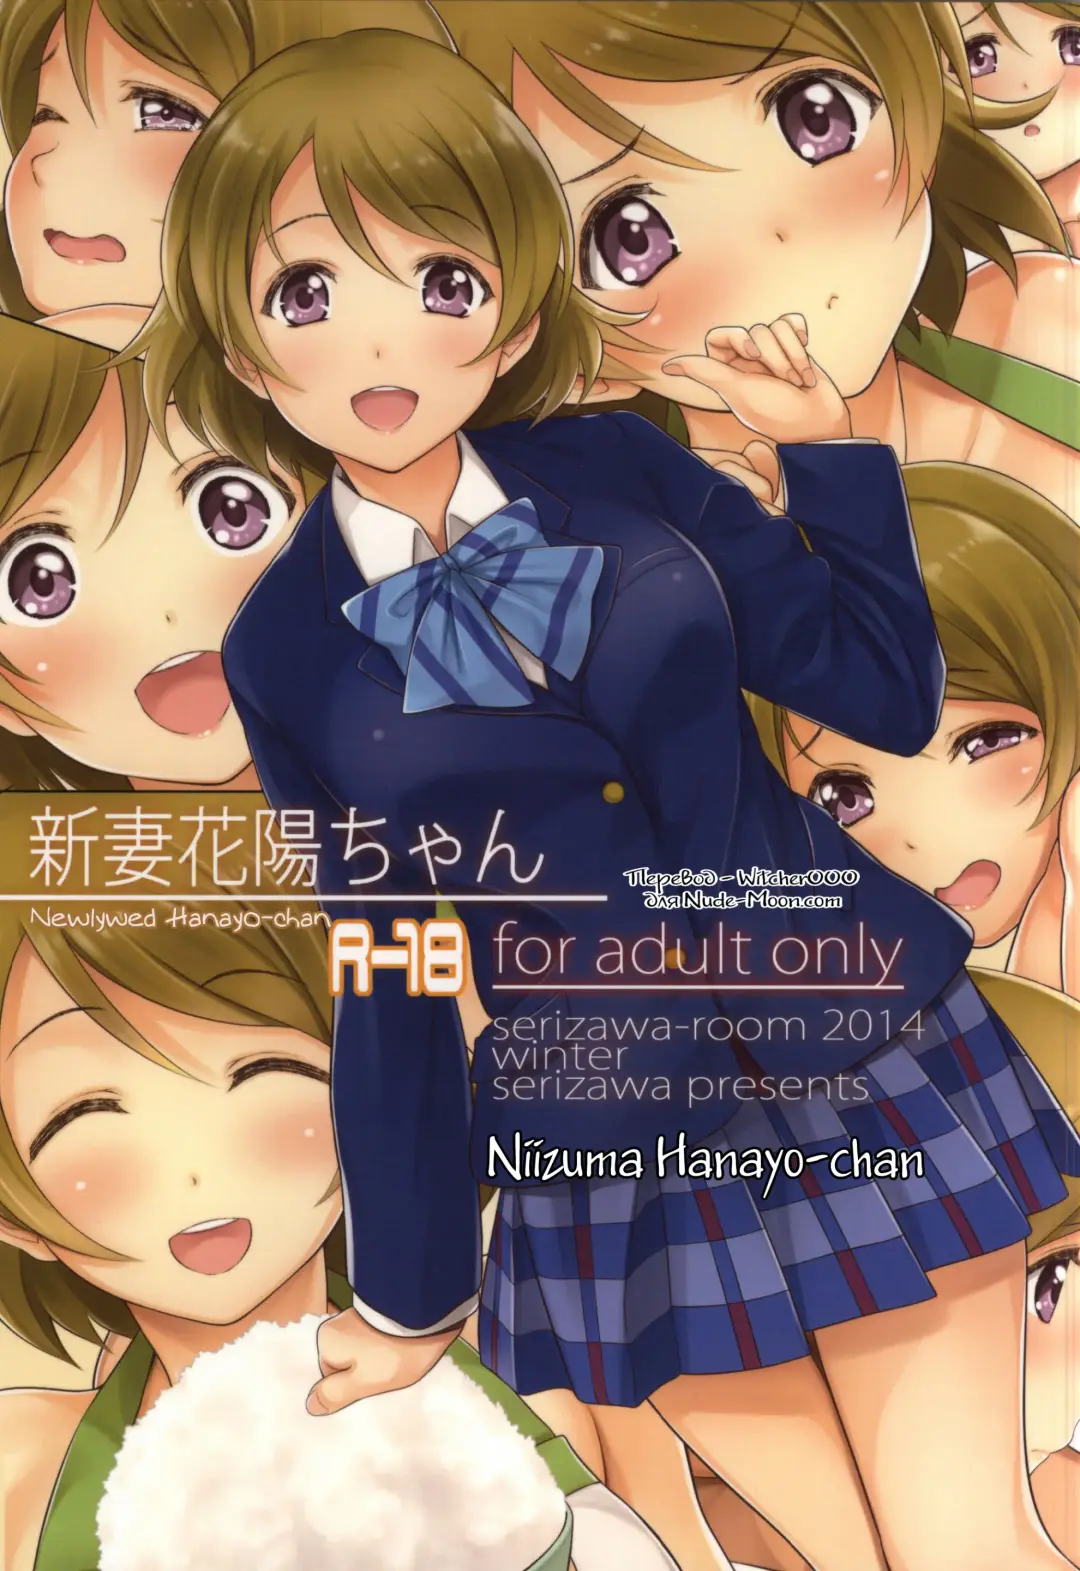 Read [Serizawa] Niizuma Hanayo-chan | Newlywed Hanayo-chan - Fhentai.net